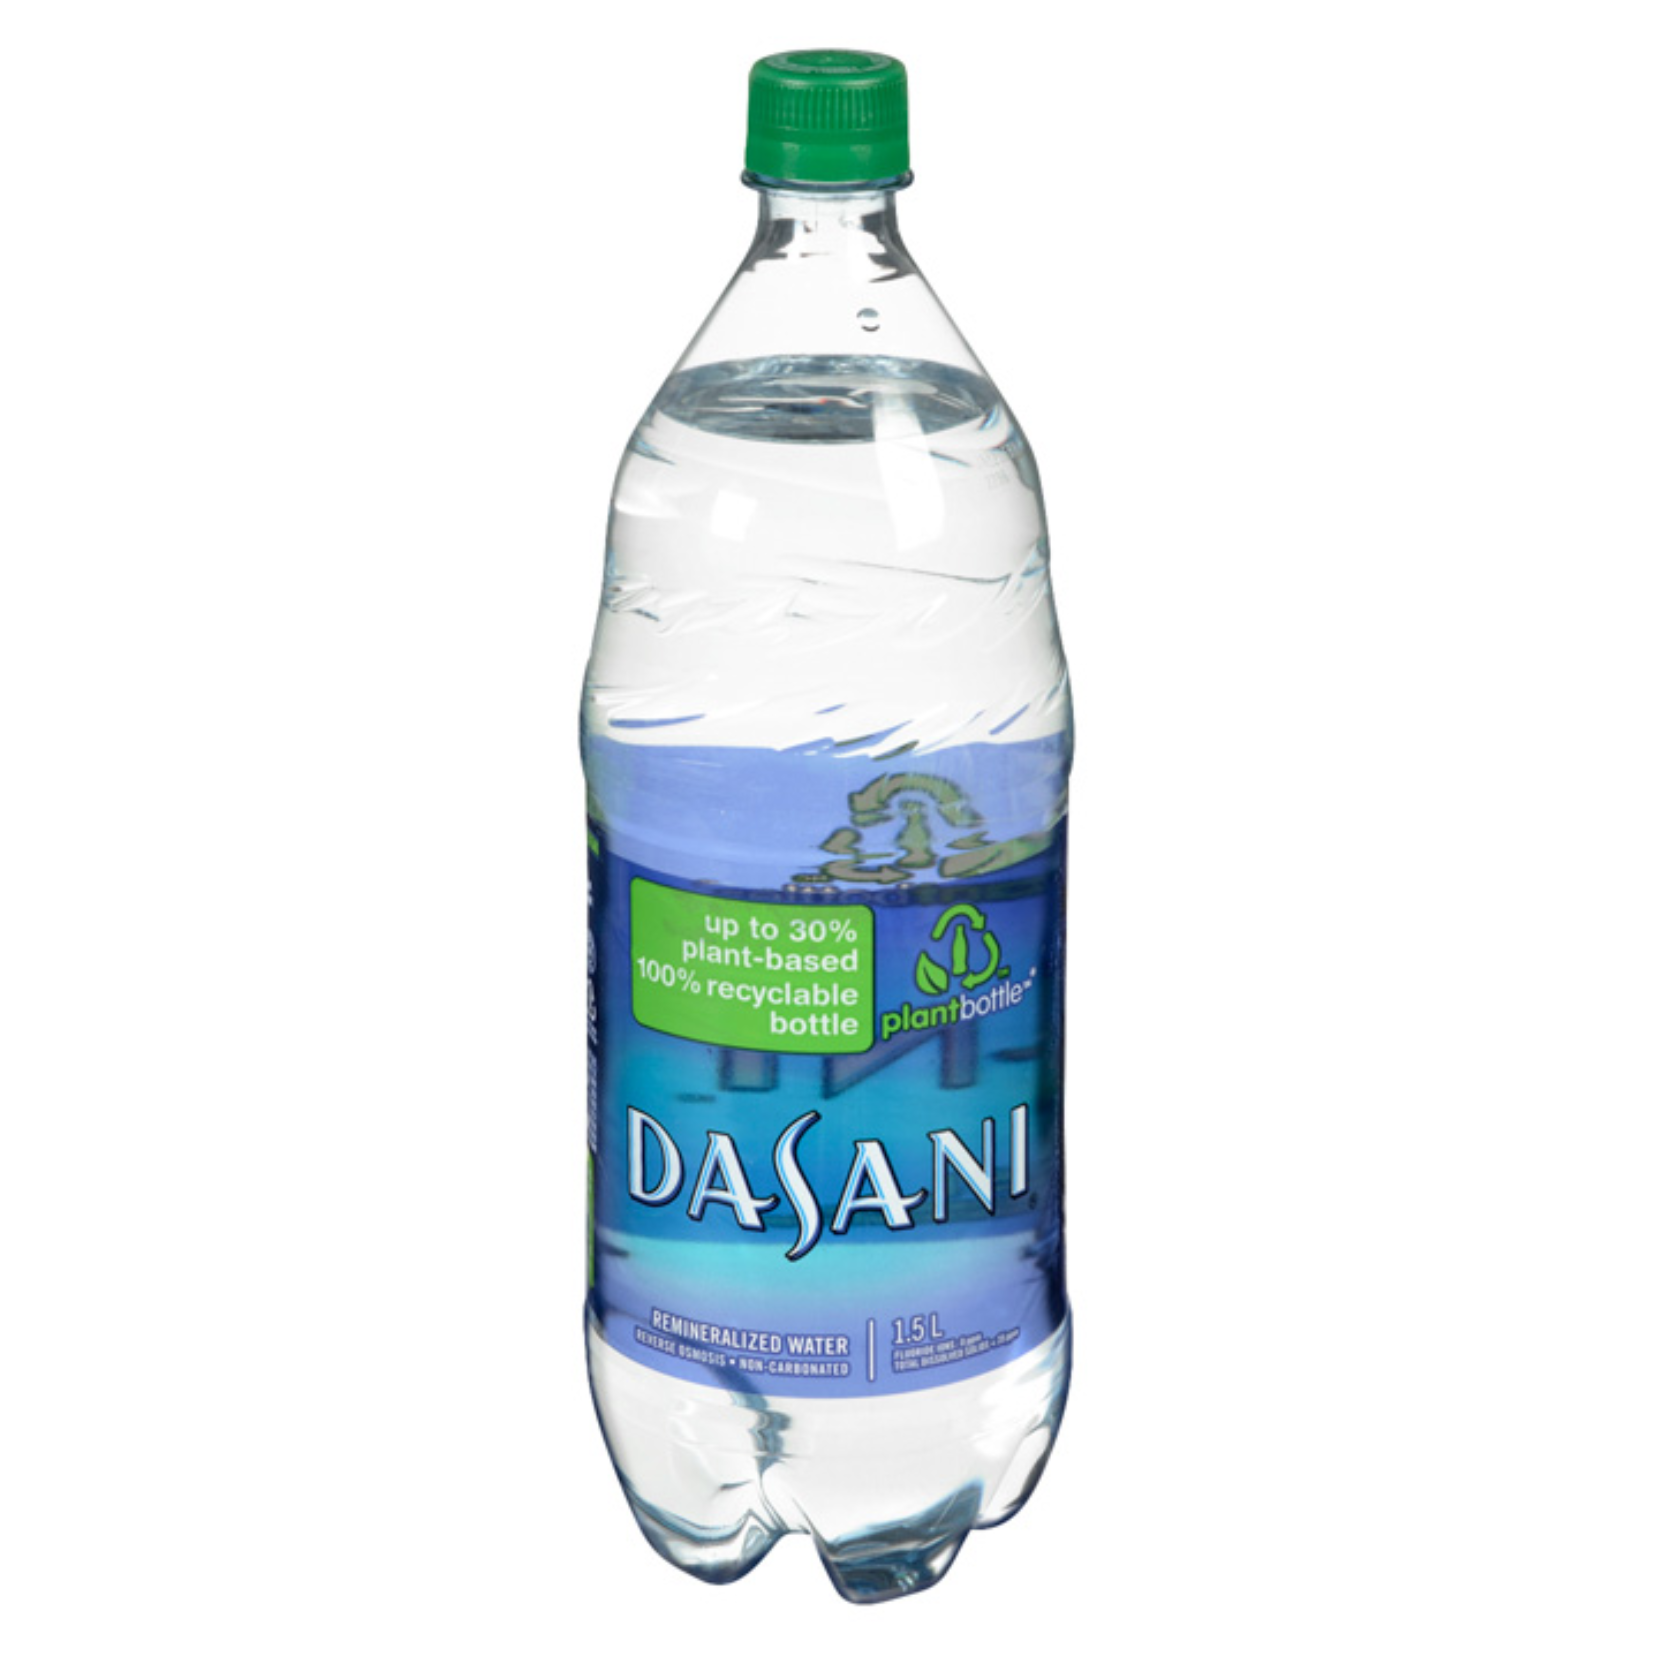 Dasani Remineralized Water 1.5L